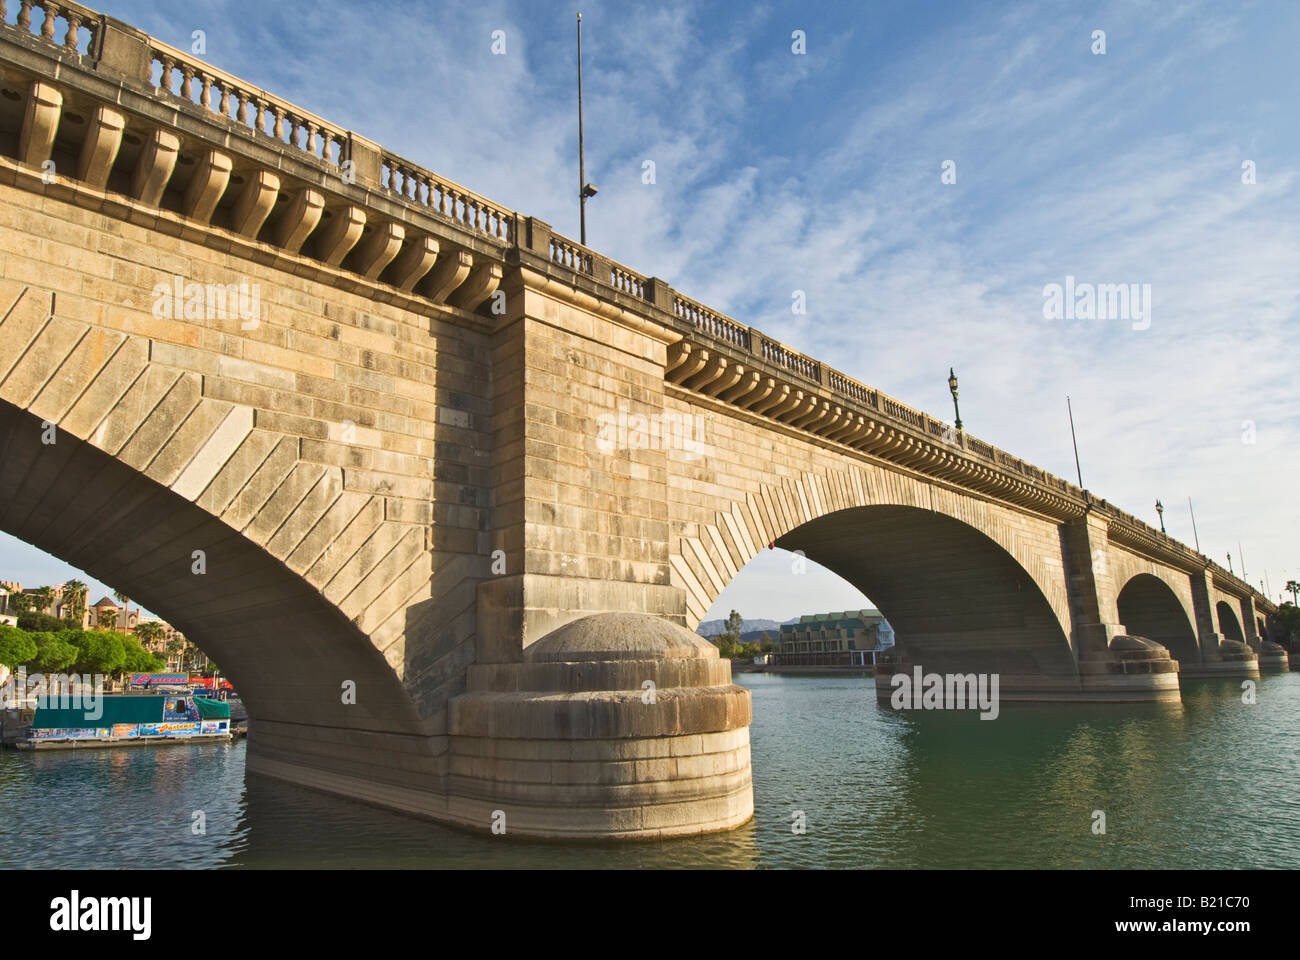 Lake havasu city london bridge hi-res stock photography and images - Alamy